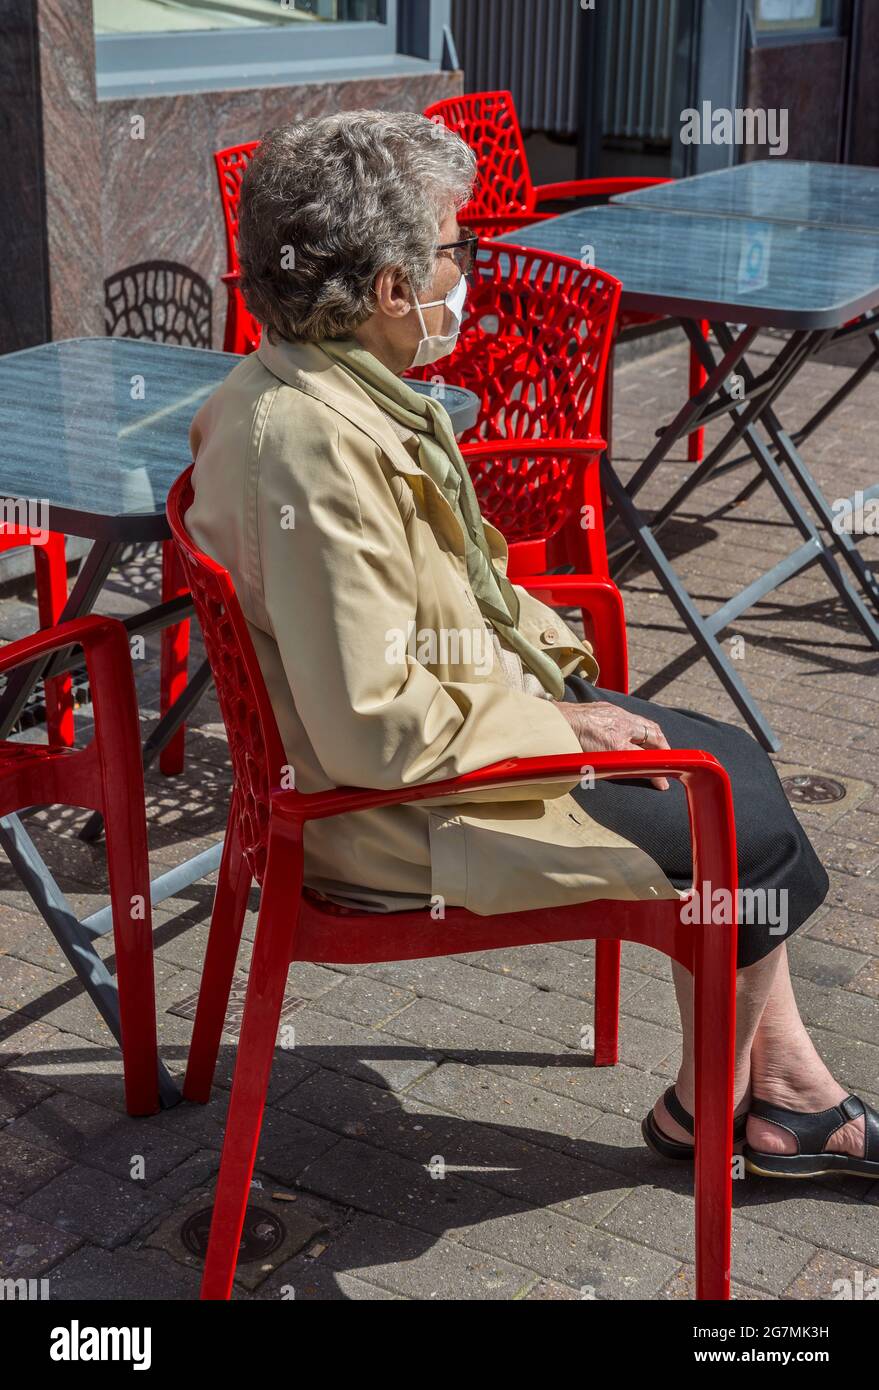 Ältere Frau mit Gesichtsmaske auf Café-Stuhl sitzend - Brüssel, Belgien. Stockfoto